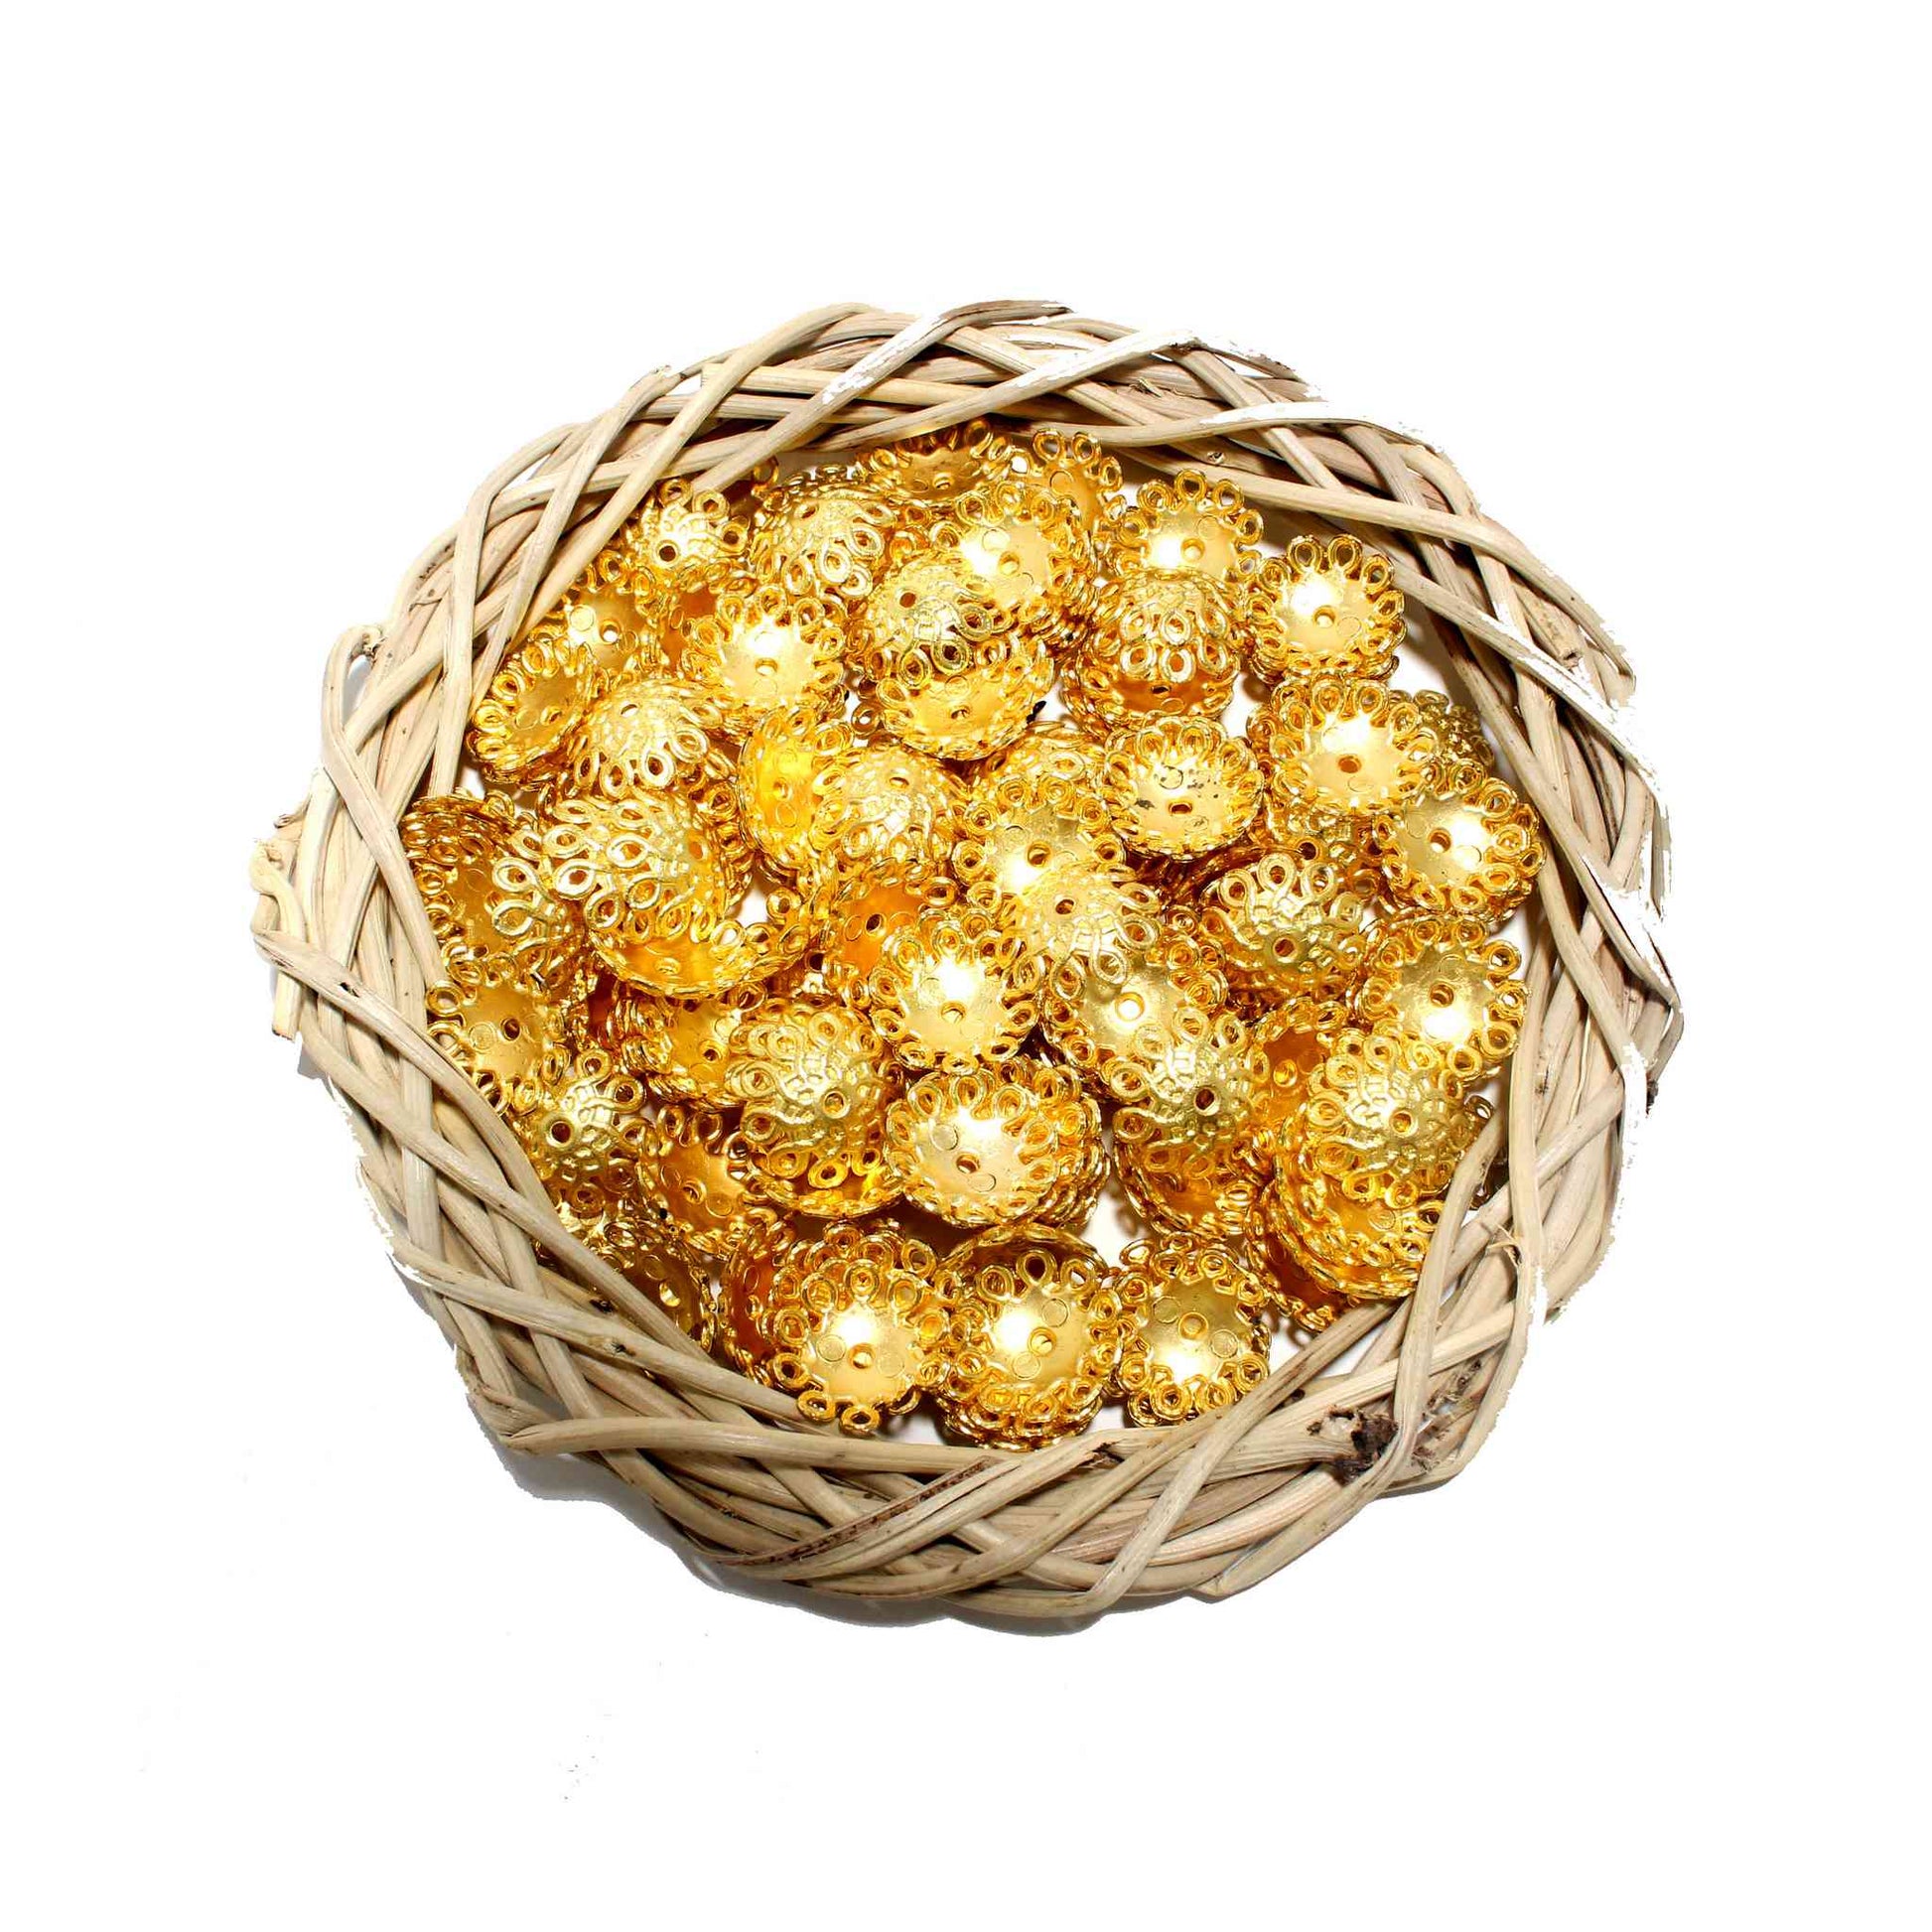 Premium quality wide Cap Bead for DIY Craft, Trousseau Packing or Decoration - Design 659 - Indian Petals